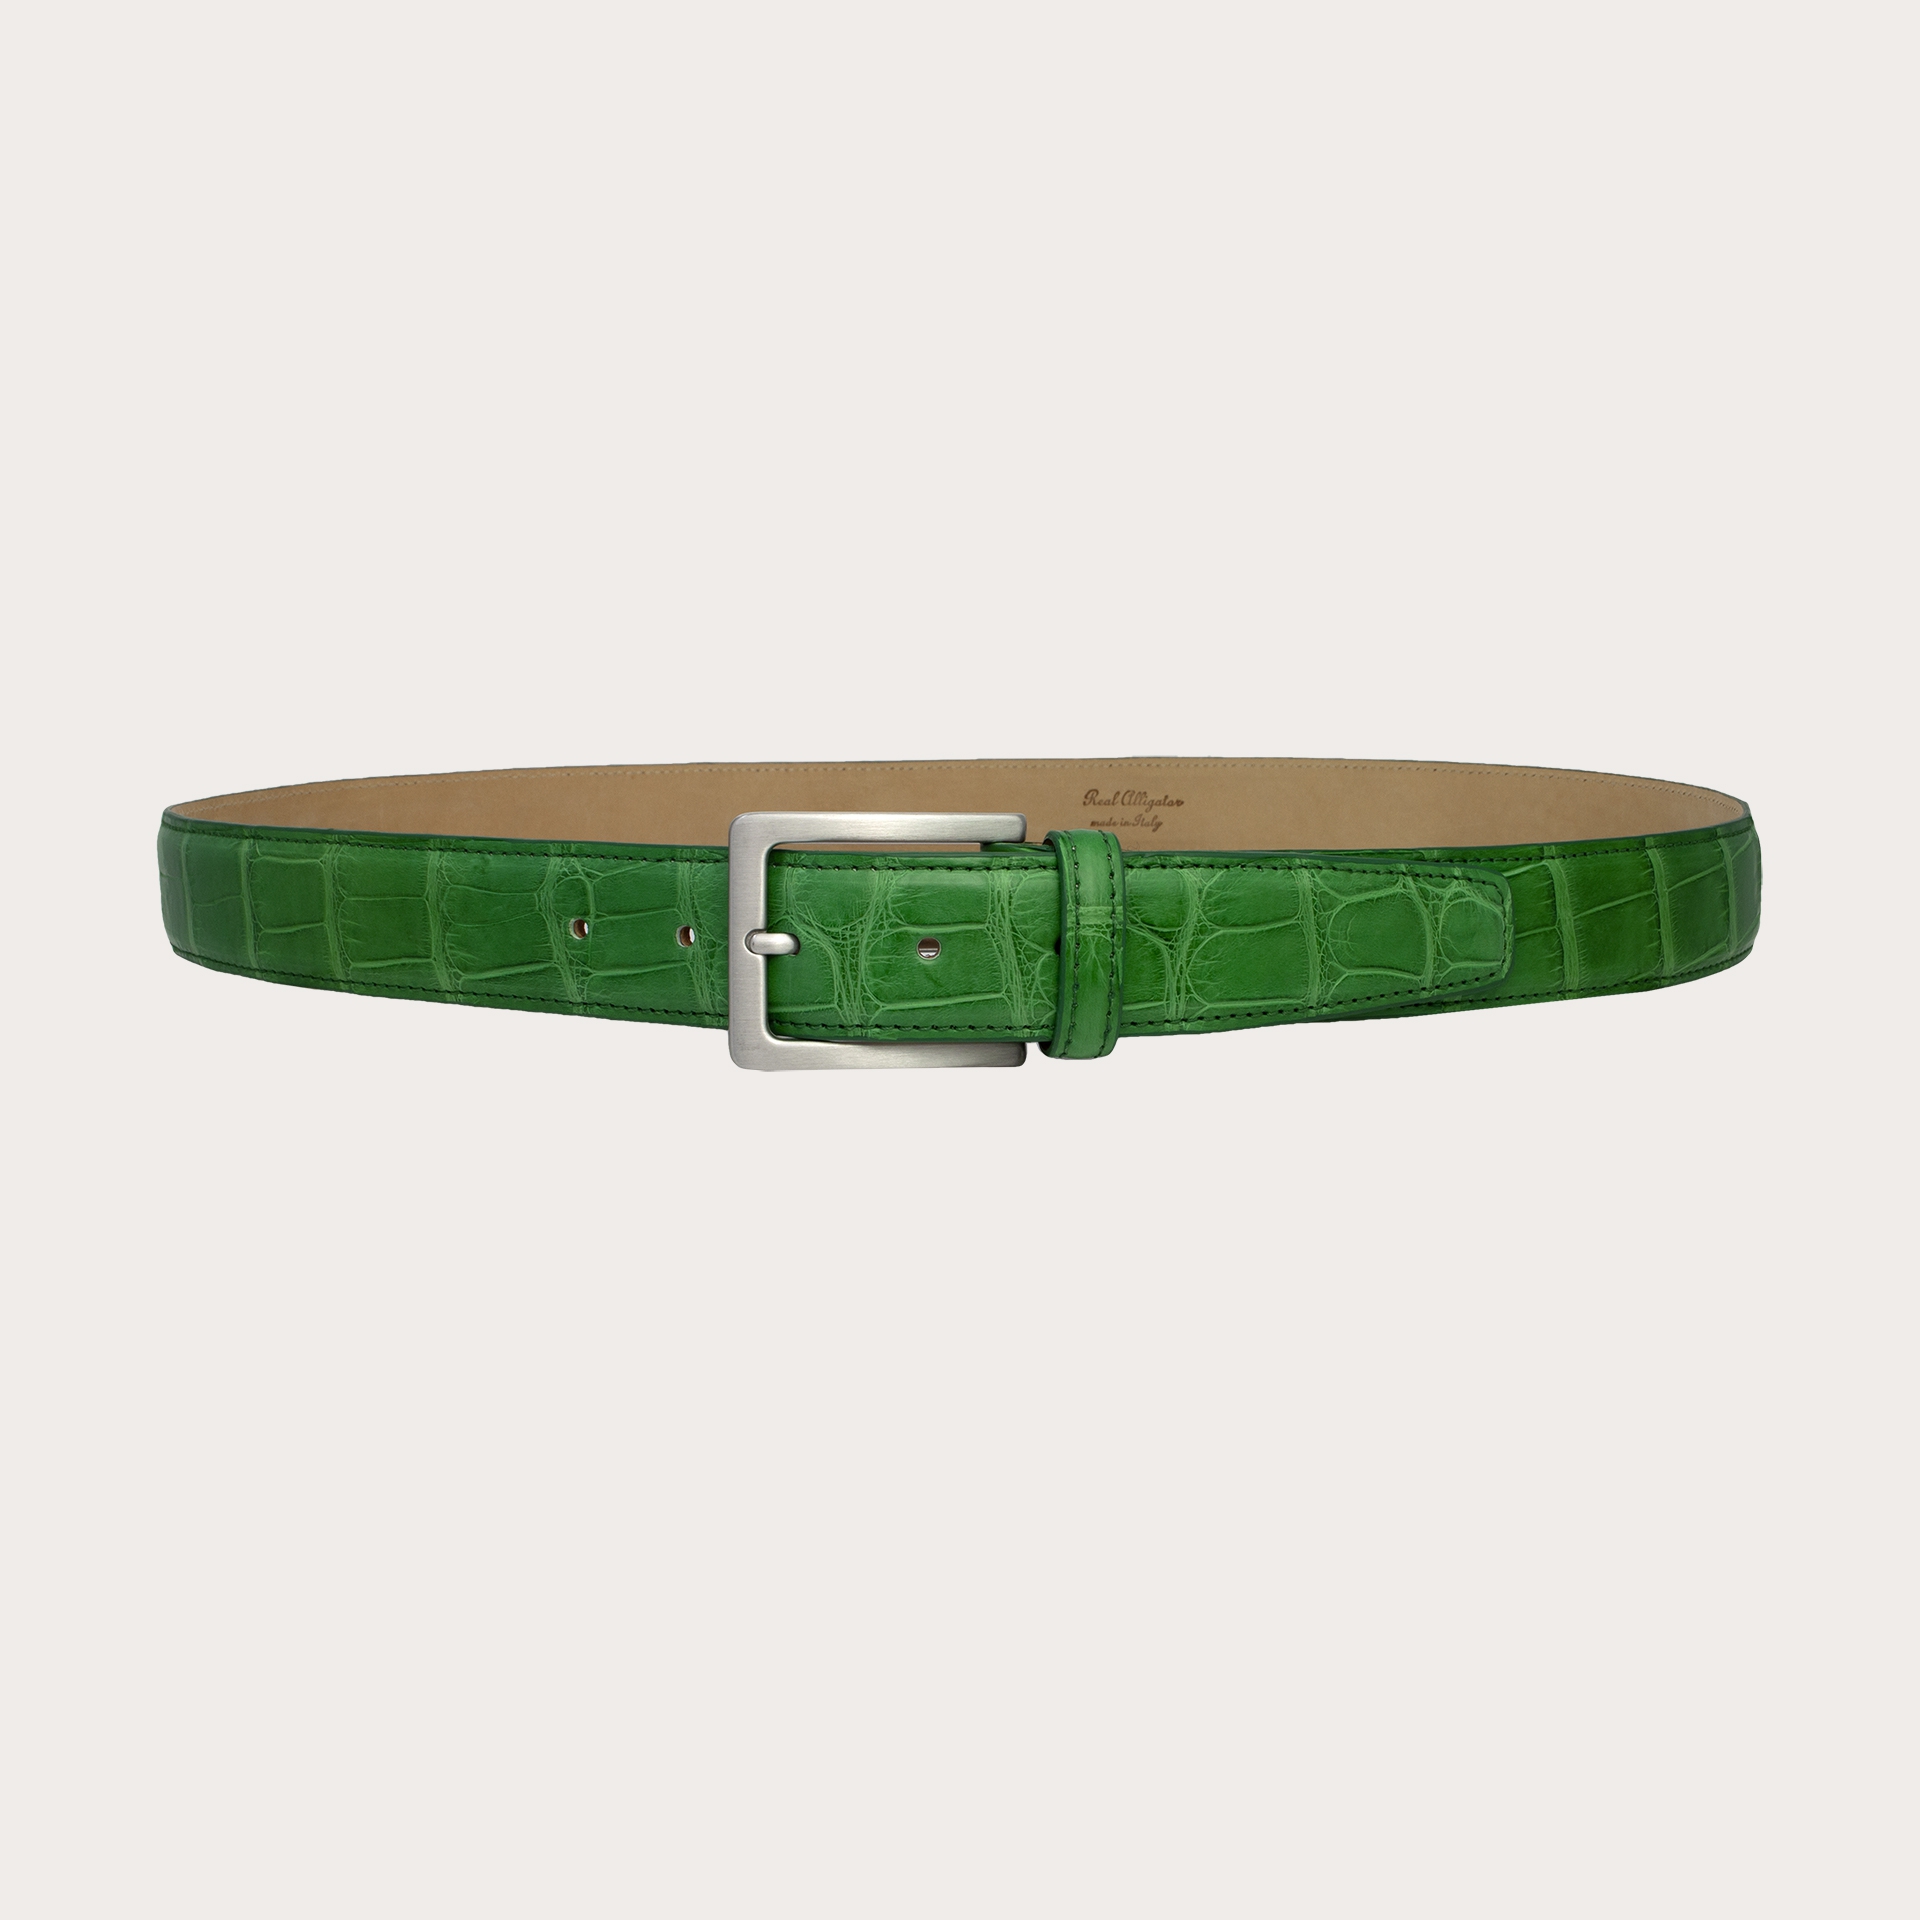 BRUCLE Alligator belt with nickel free buckle, green